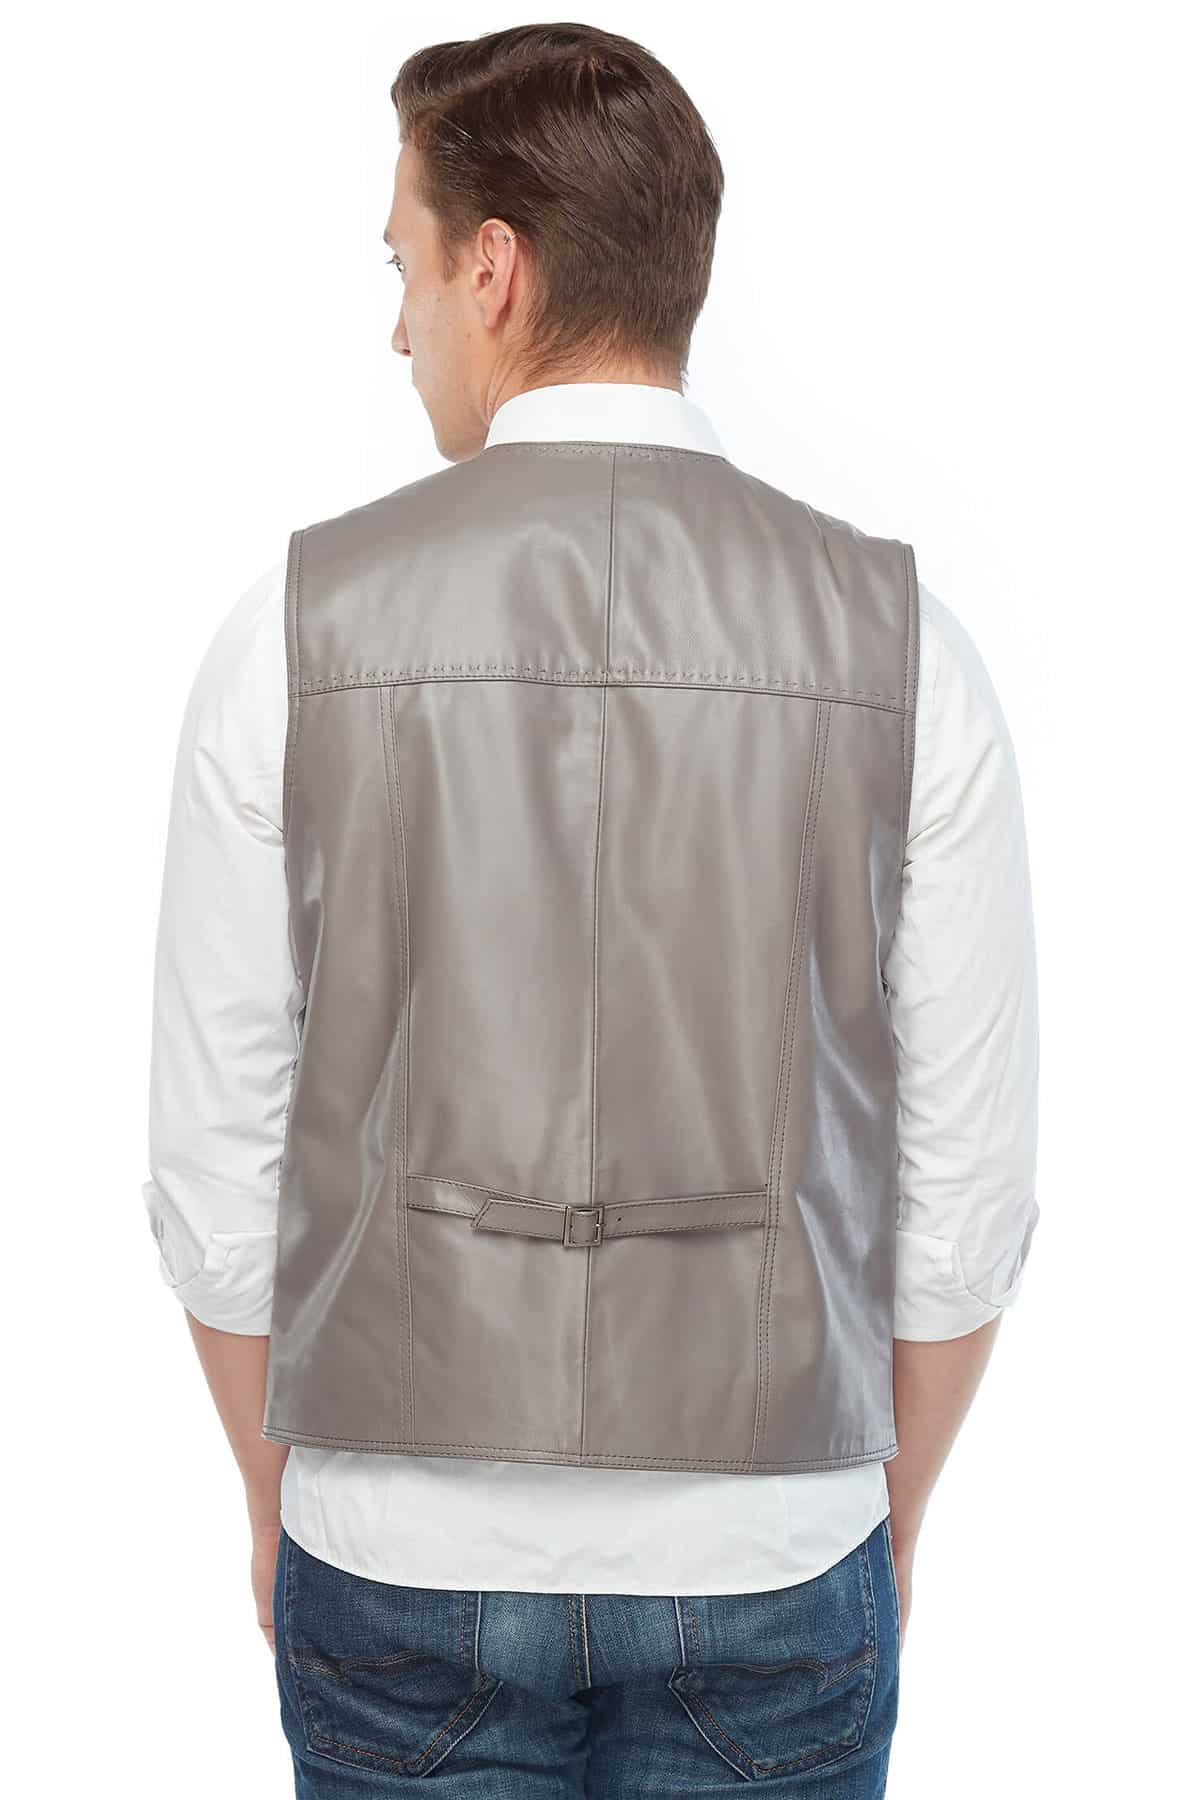 Joseph Taupe Genuine Leather Vest Back